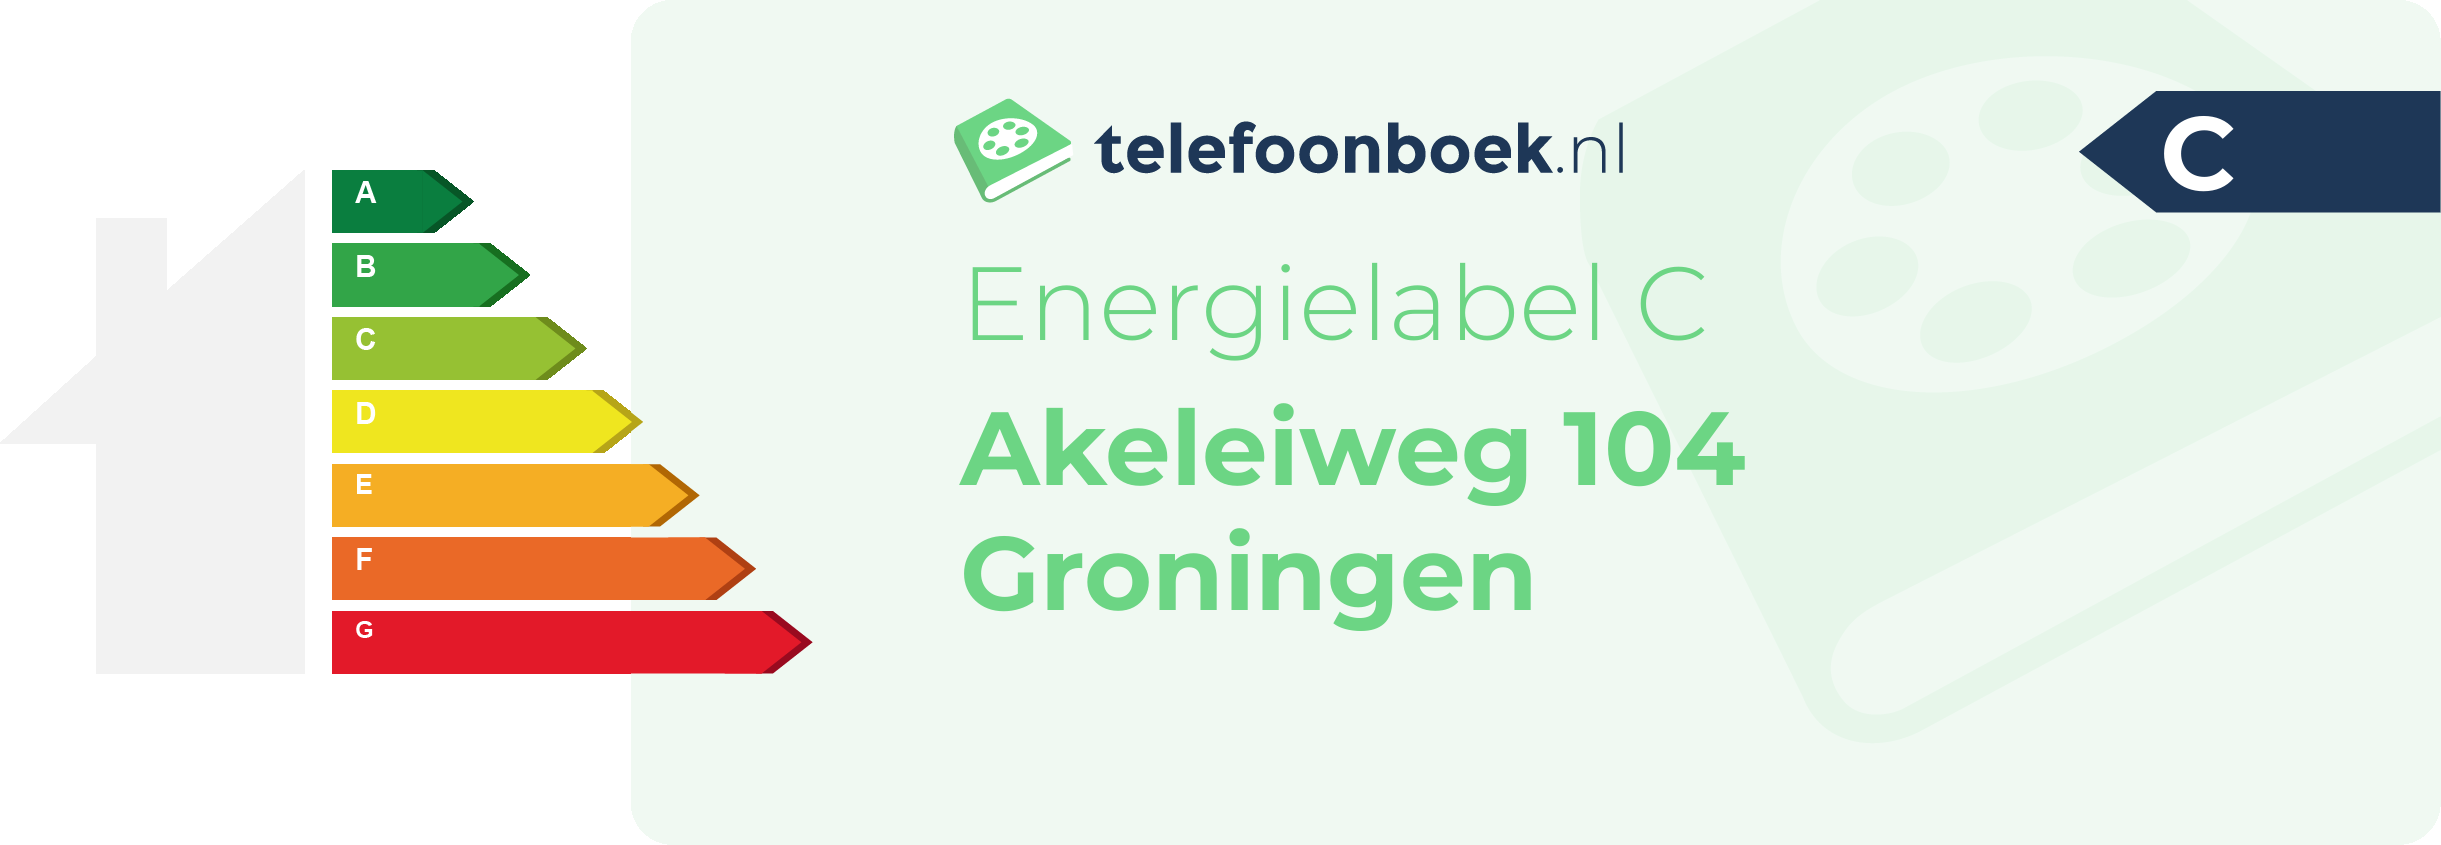 Energielabel Akeleiweg 104 Groningen